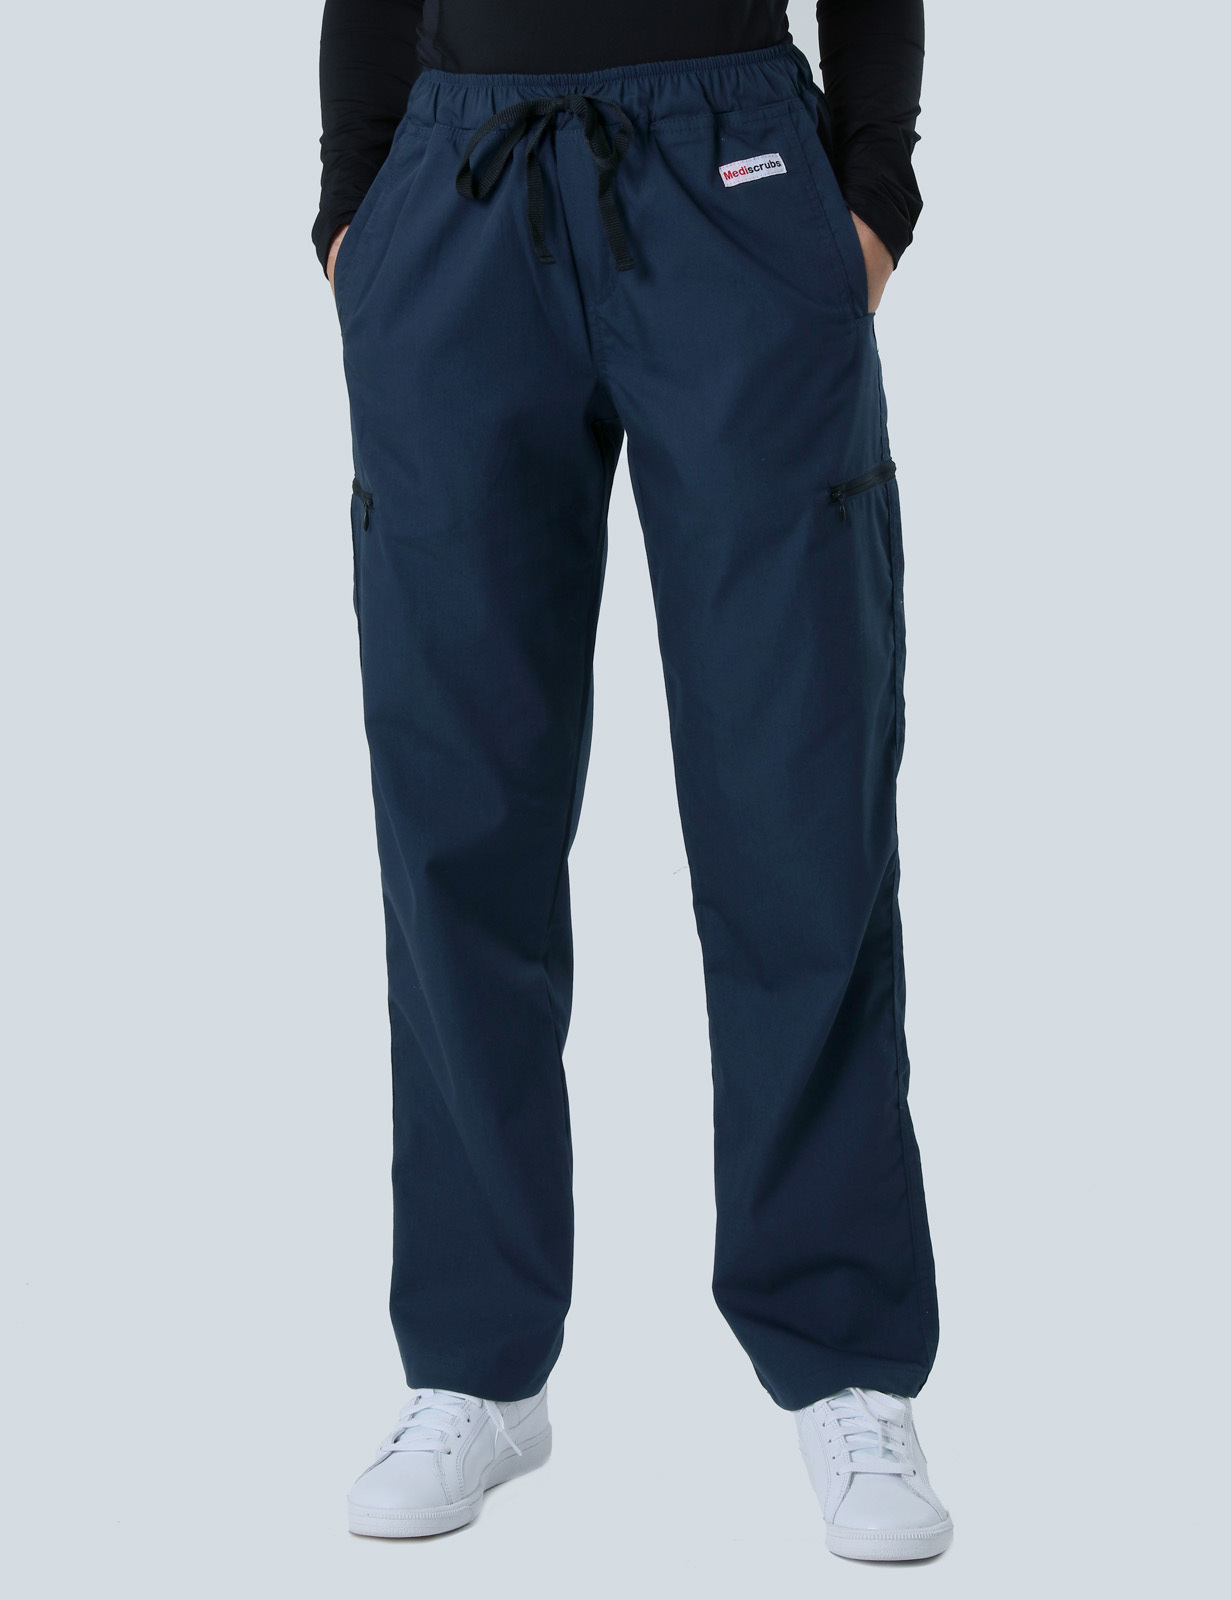 Women's Utility Pants - Navy - 4X large